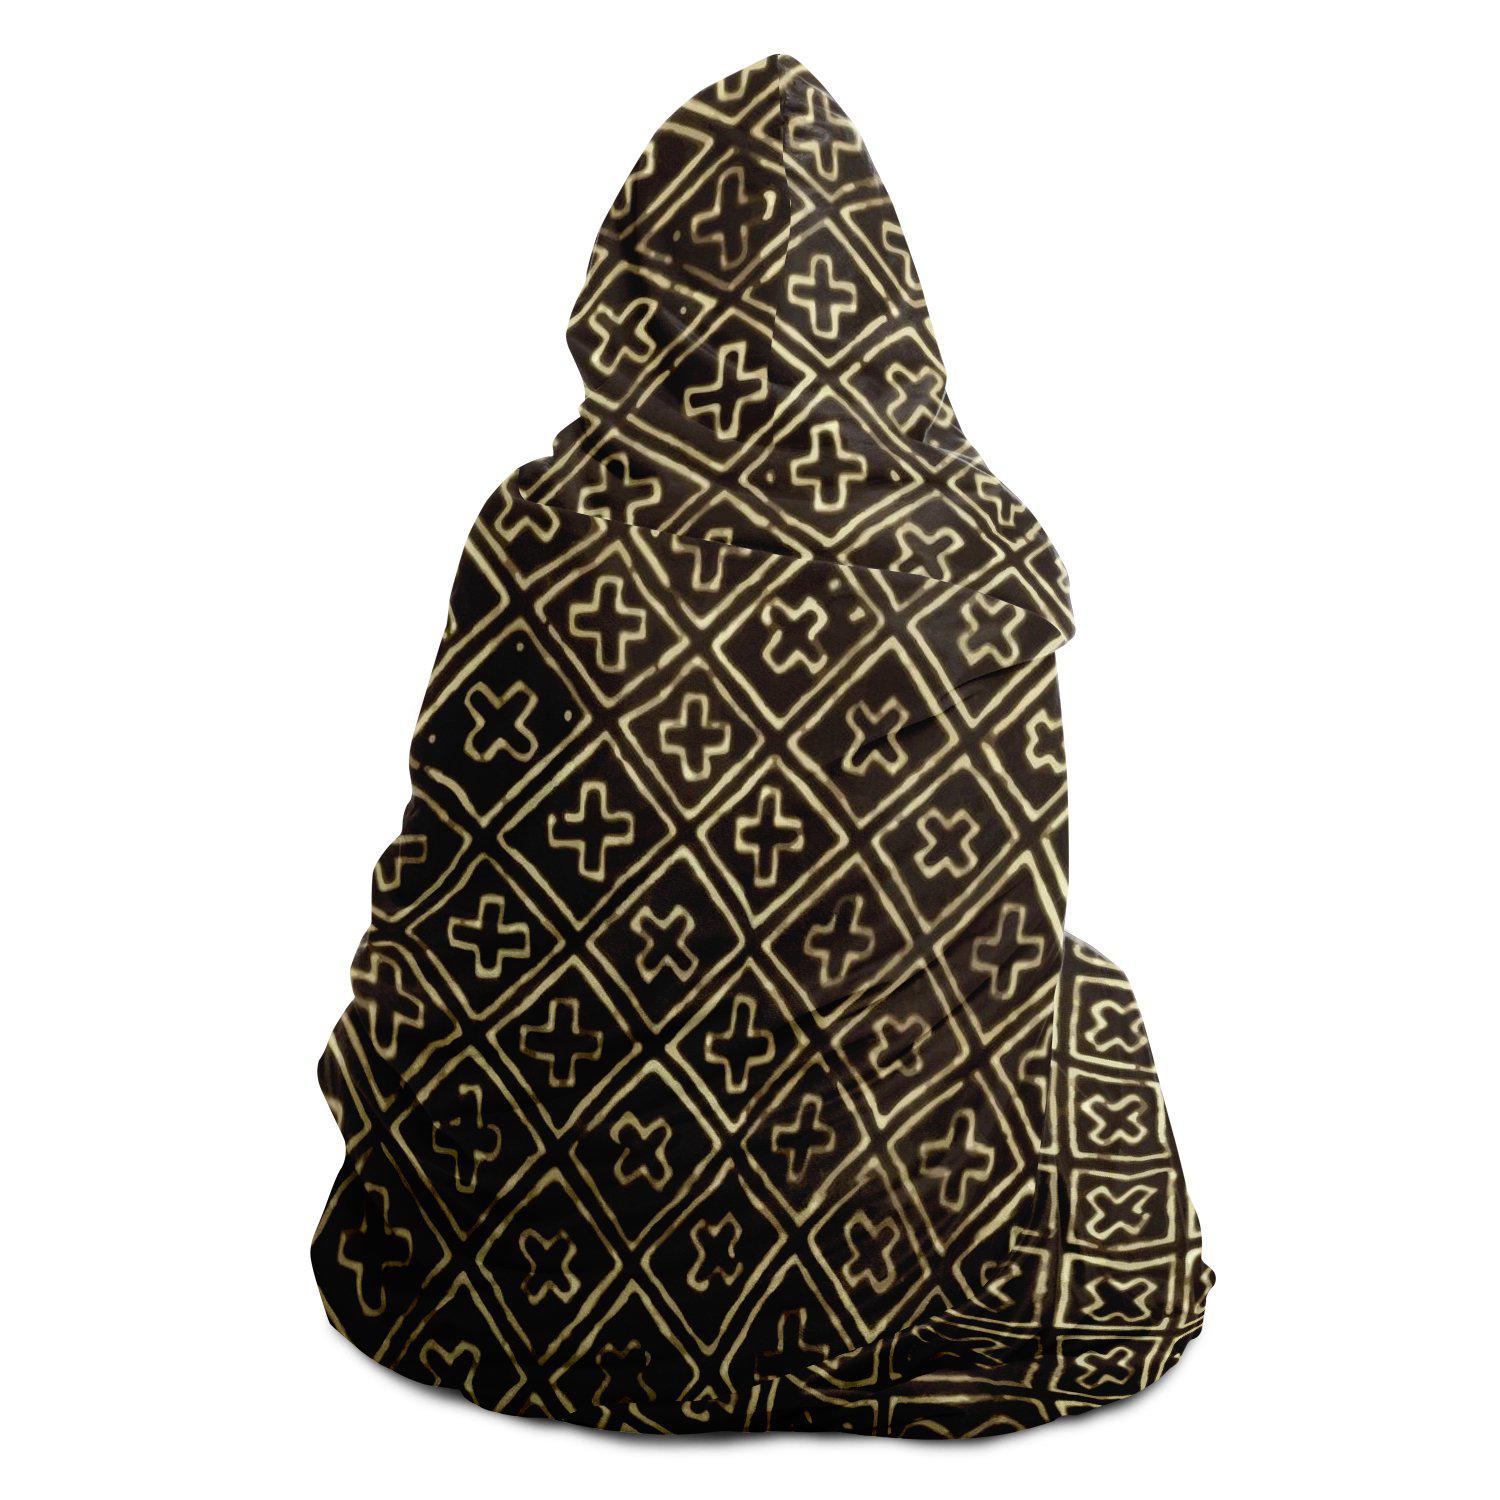 Hooded Blanket - AOP Hooded Blanket, Mali Mudcloth African Inspired